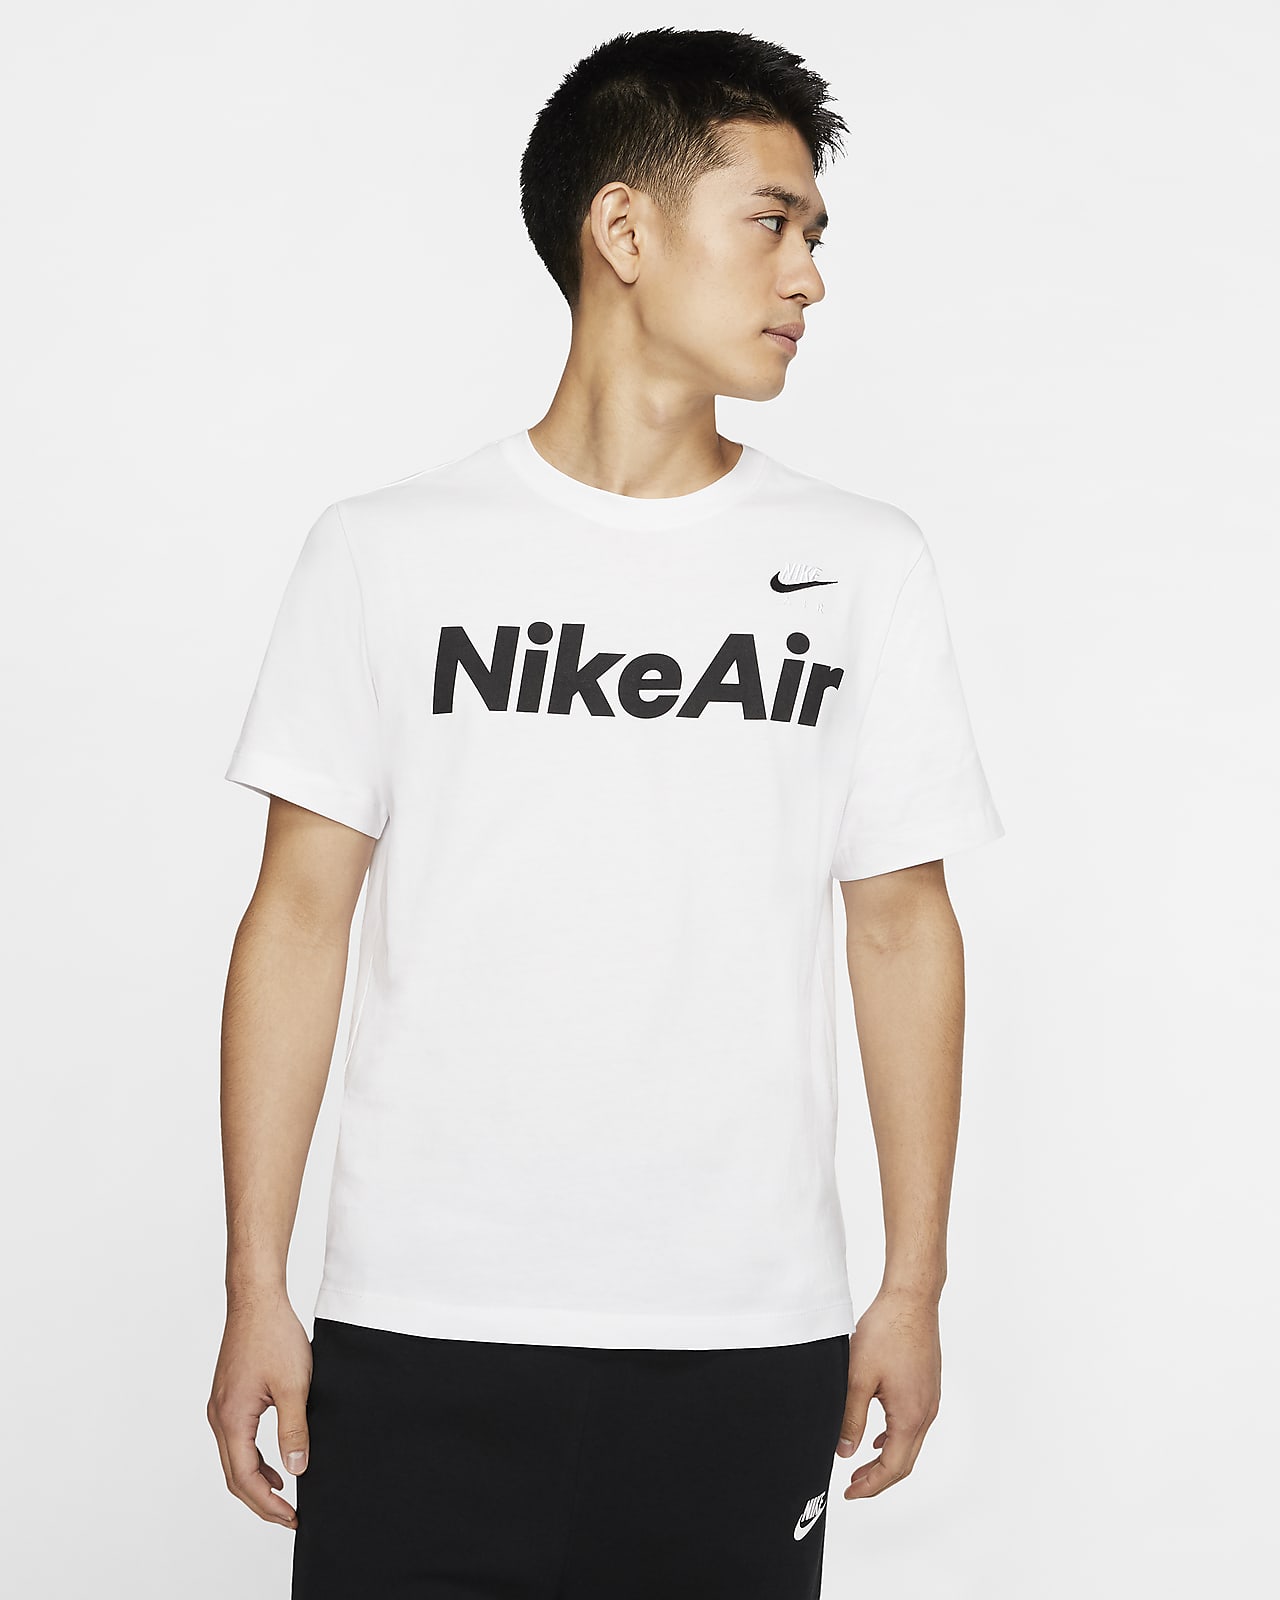 Nike Air Men's T-Shirt. Nike IL